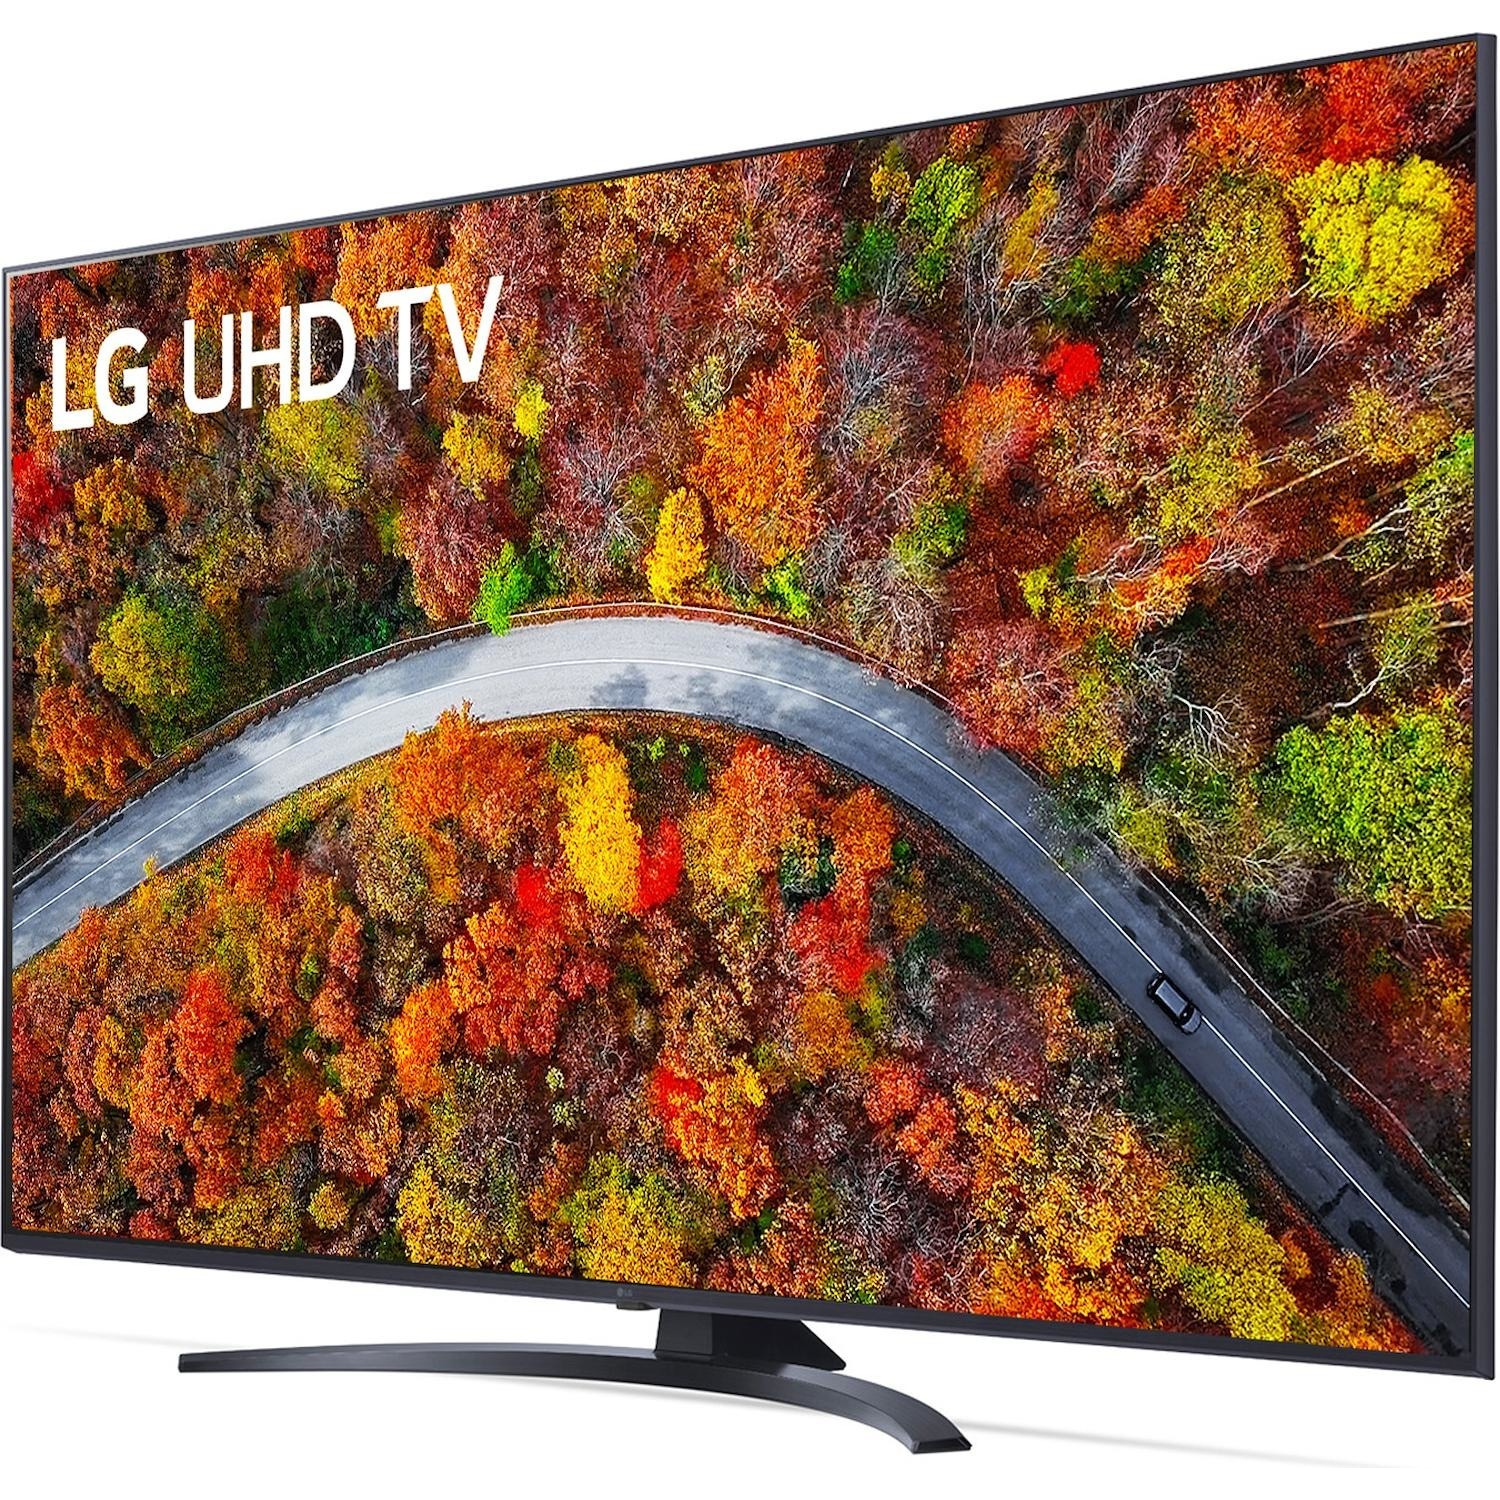 Immagine per TV LED Smart 4K UHD LG 55UP81006 da DIMOStore